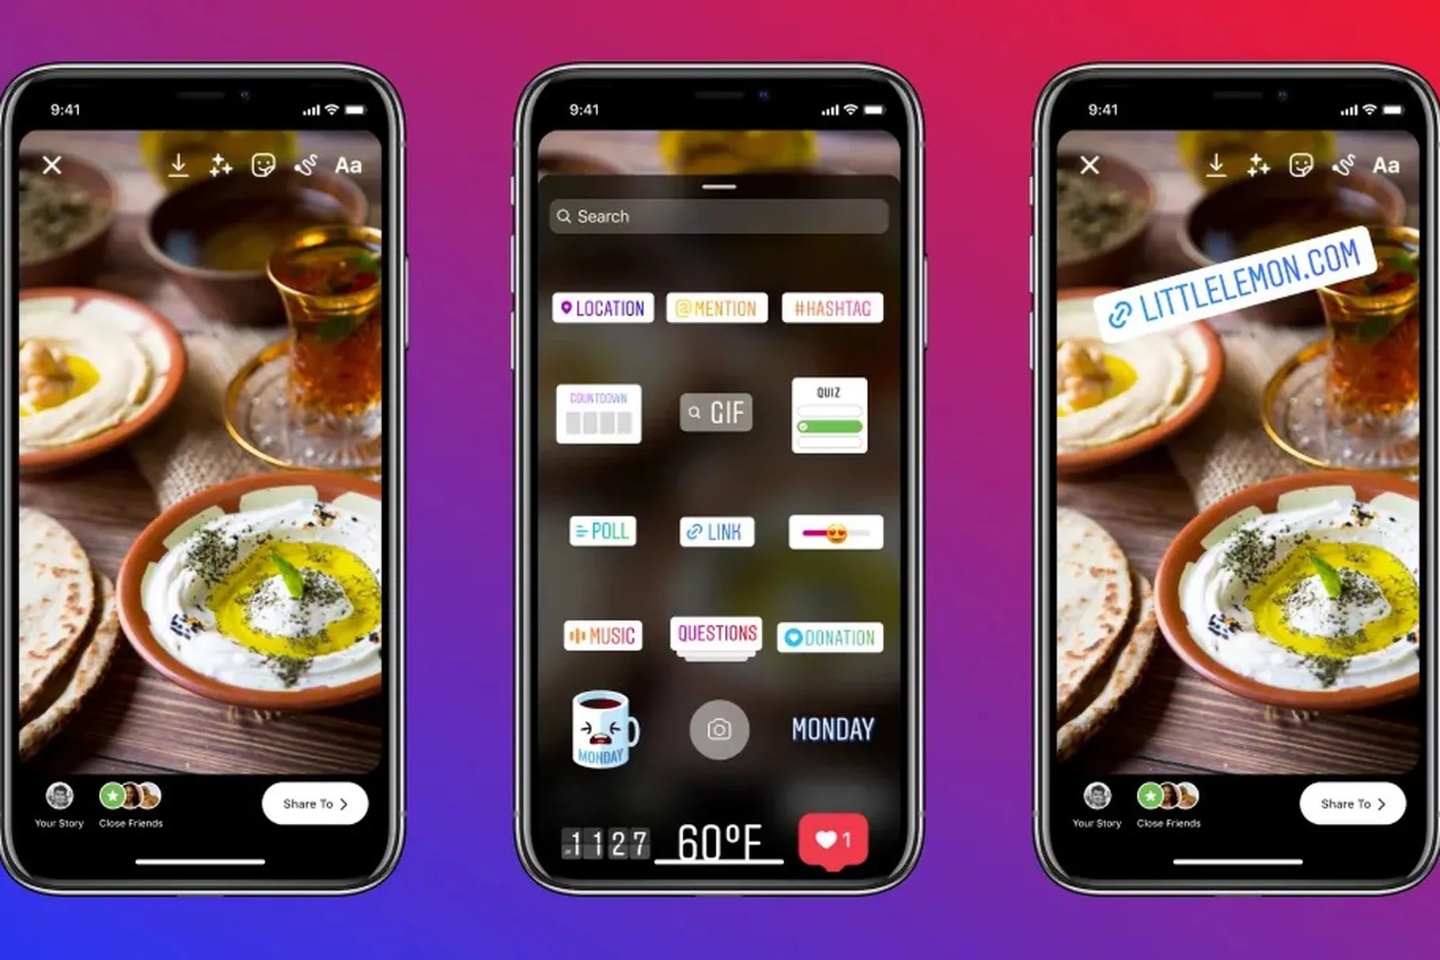 IG 追蹤數沒破萬也可以有上滑功能？ iOS 版 Instagram 正在測試讓所有人都可以在限時動態中分享連結！